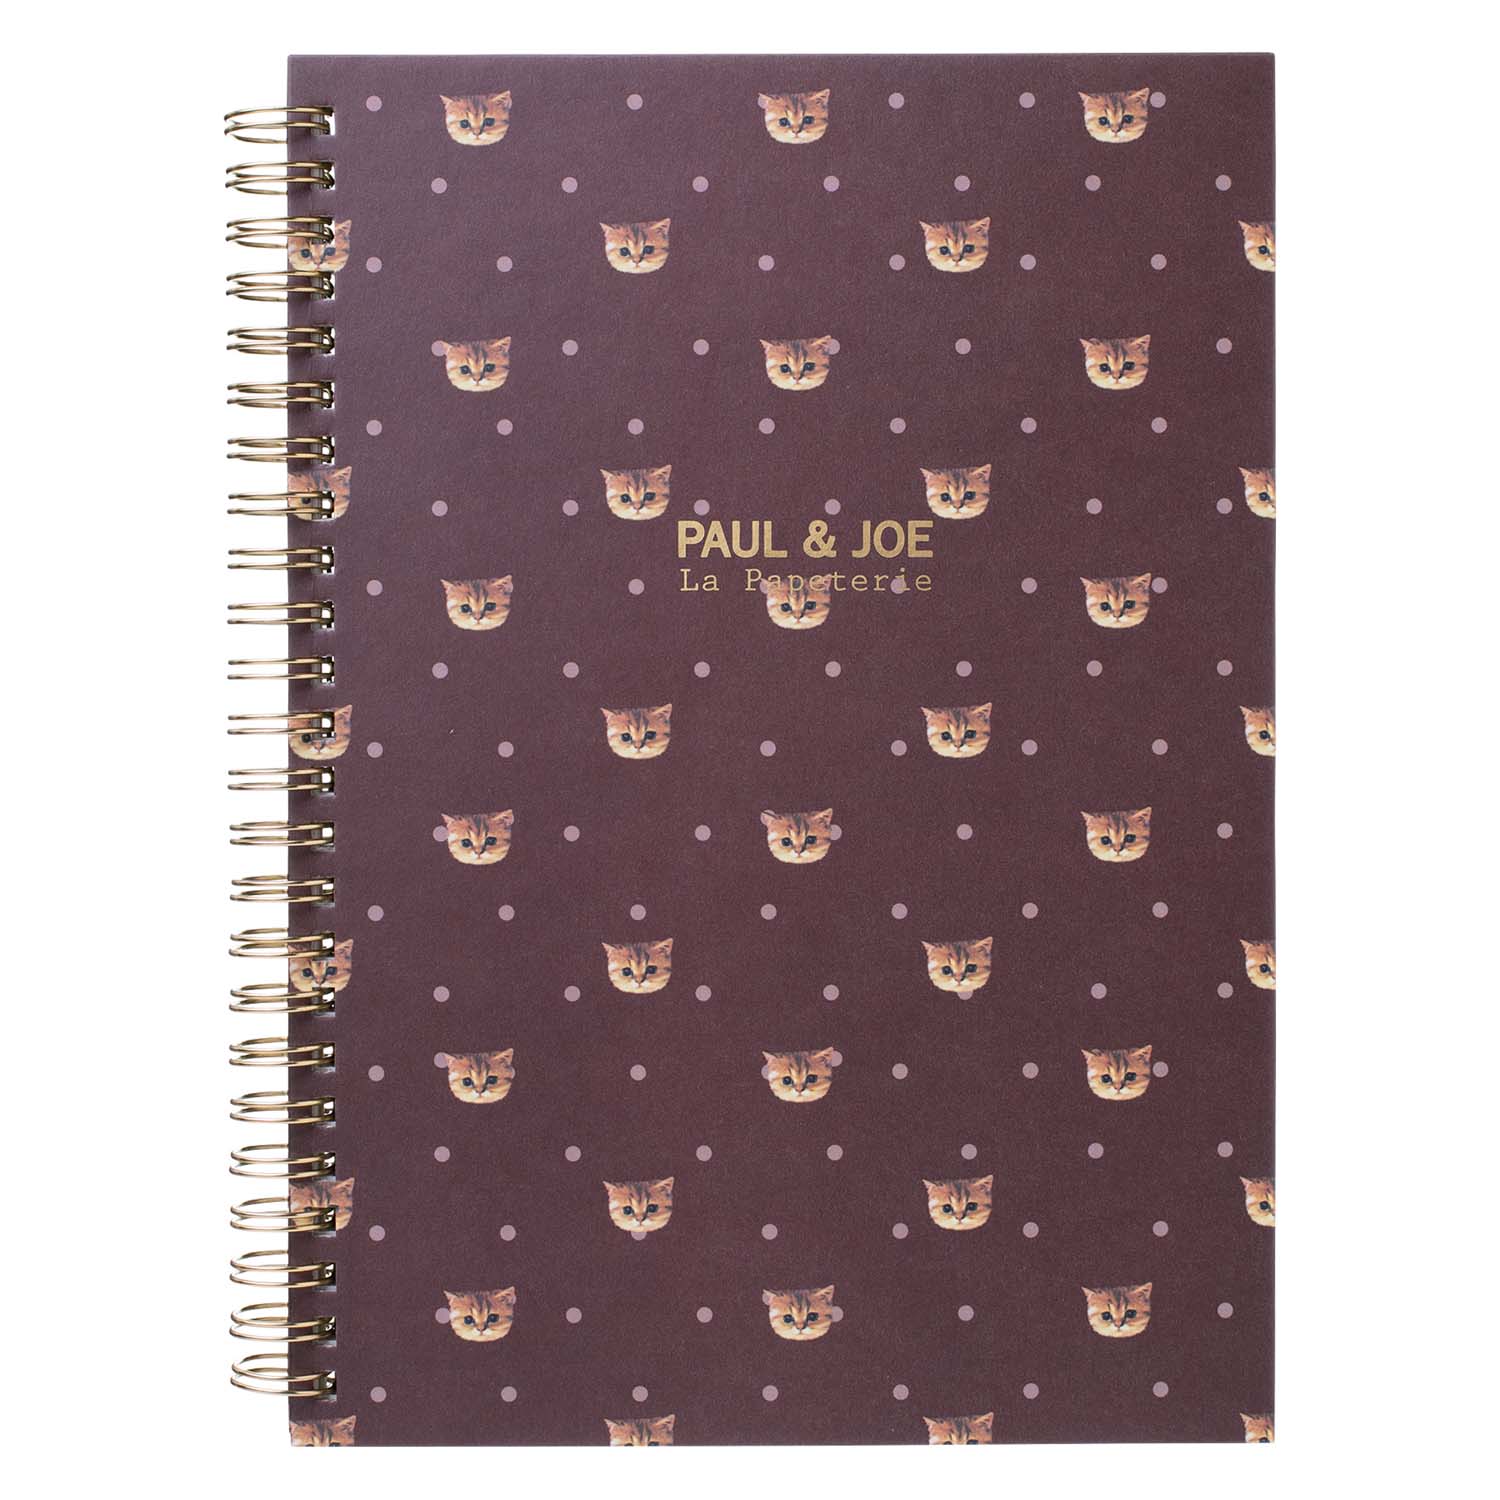 A5 Notebook Nounette Polka Dots Chocolat PAJ-NB15-CBR PAUL & JOE La Papeterie